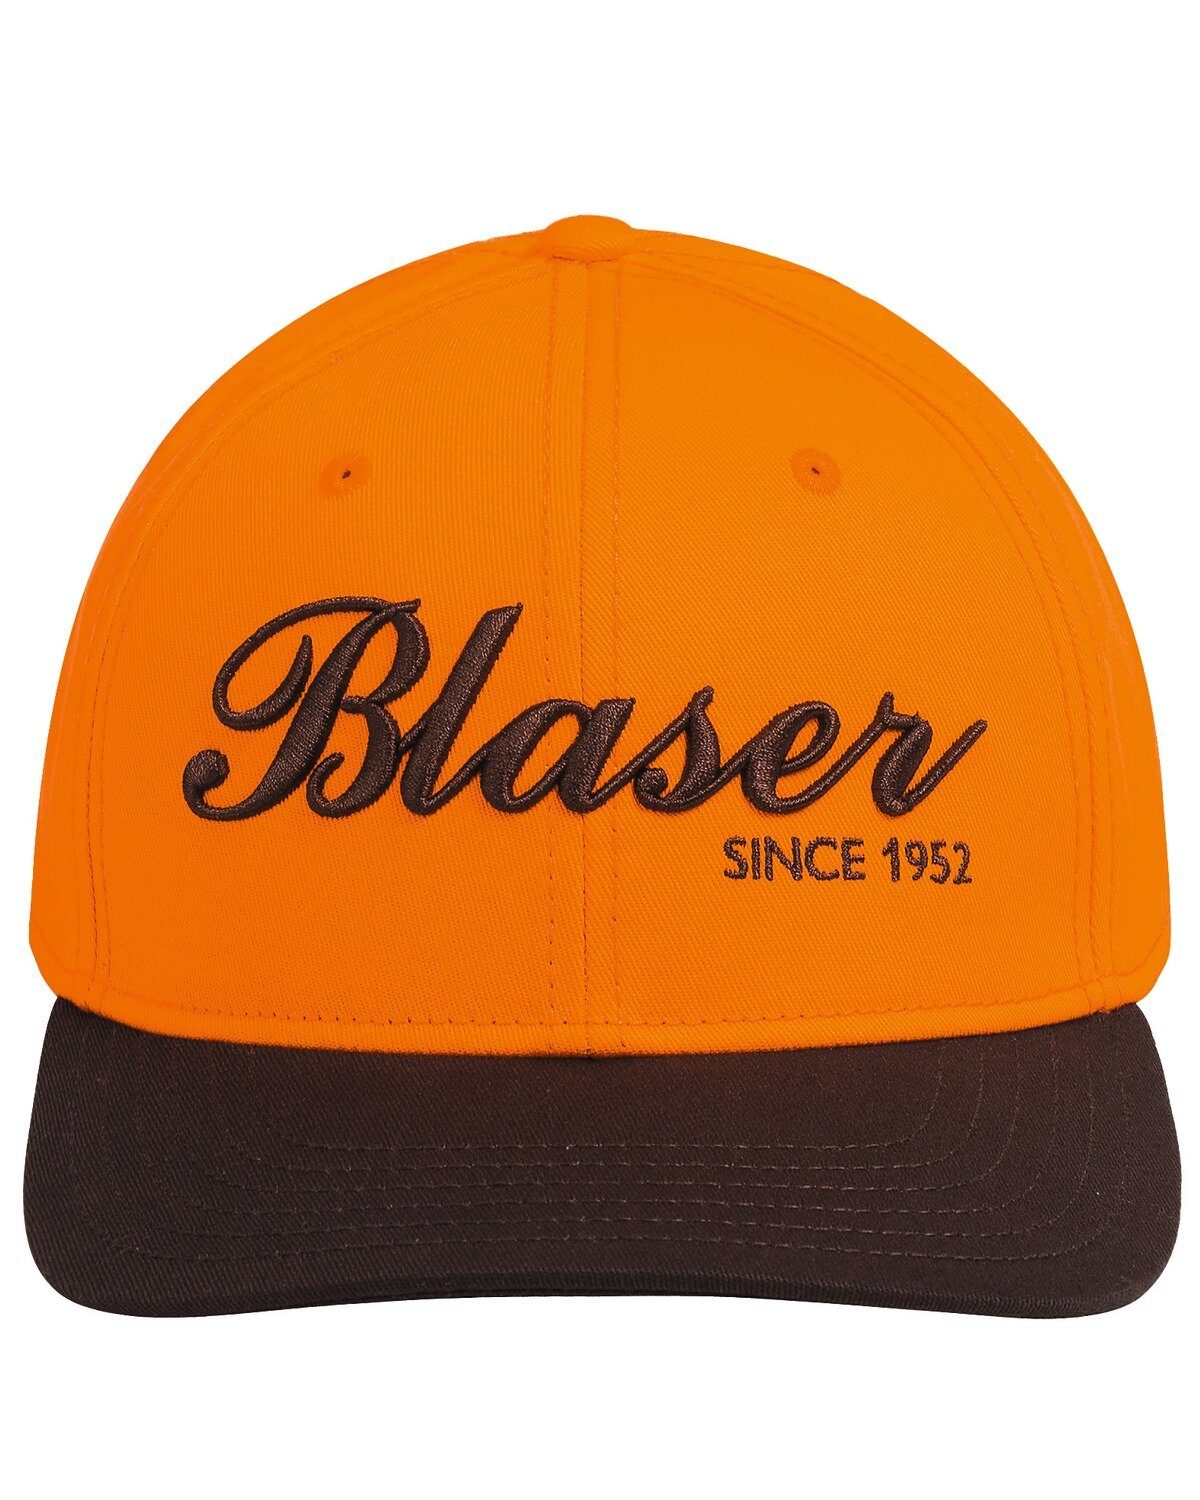 Blaser Baseball Cap Cap Striker Limited Edition